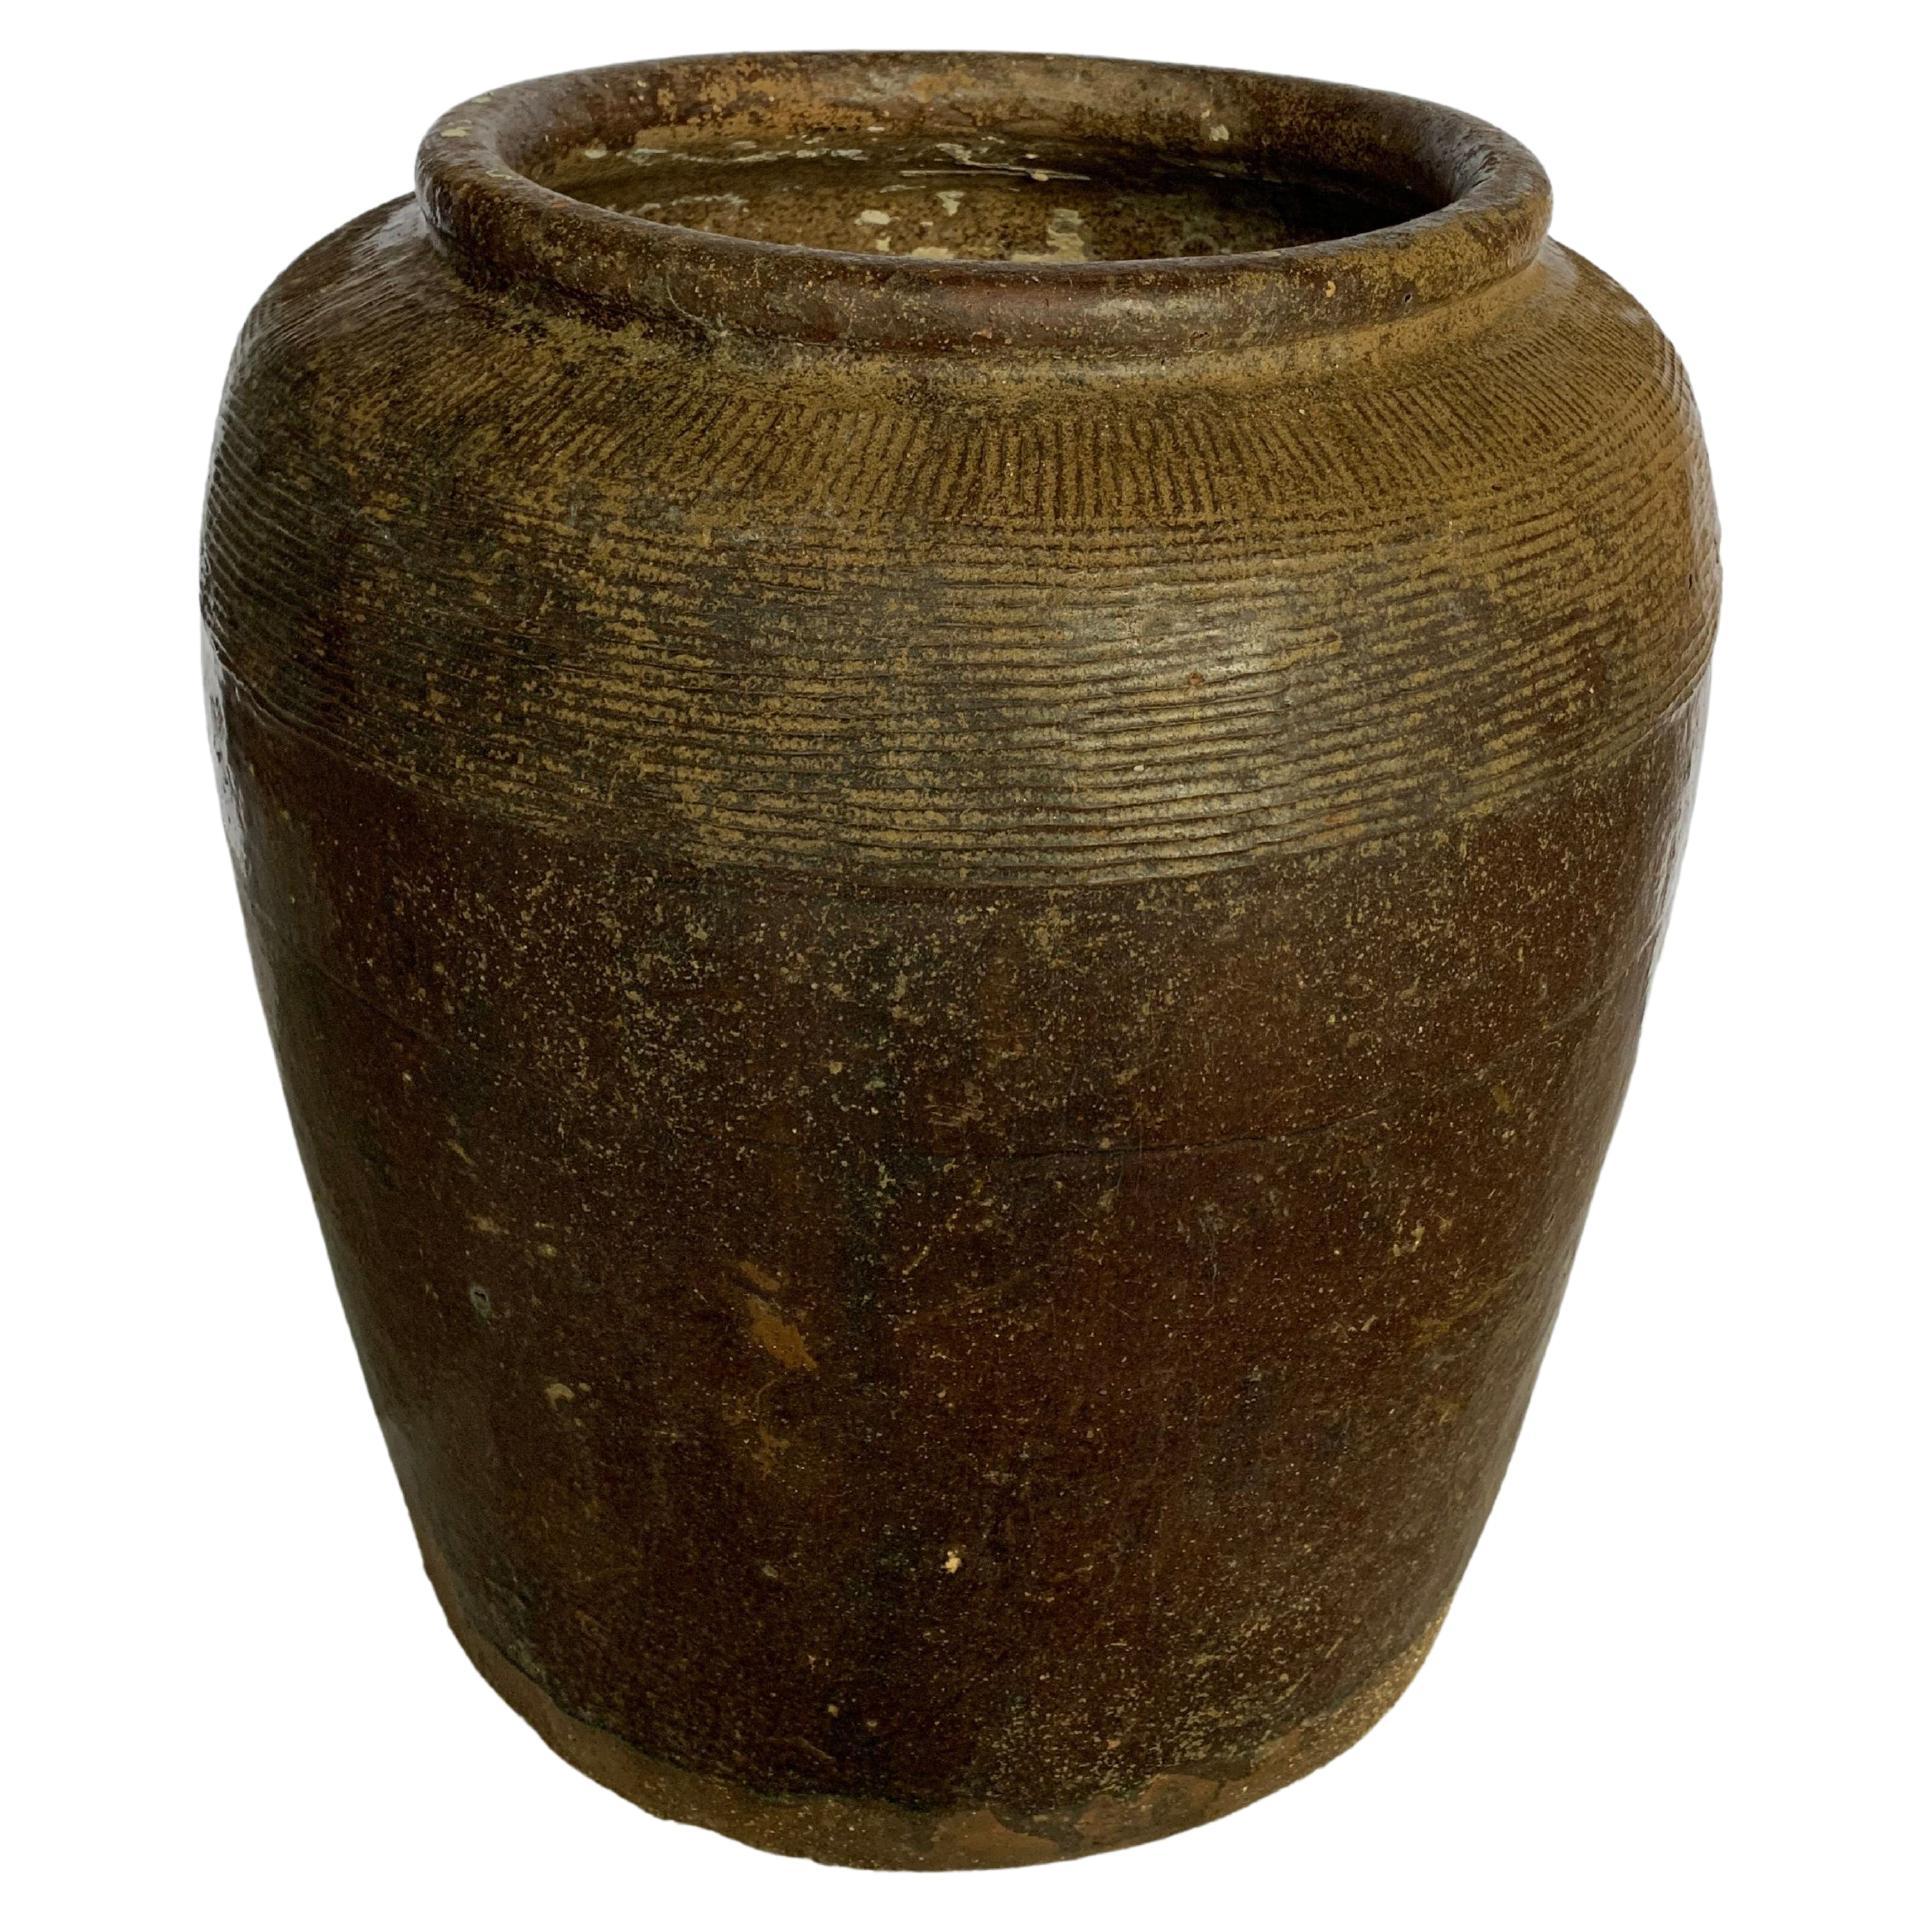 Antique Chinese Brown Glazed Ceramic Salty Egg Jar, c. 1900 For Sale